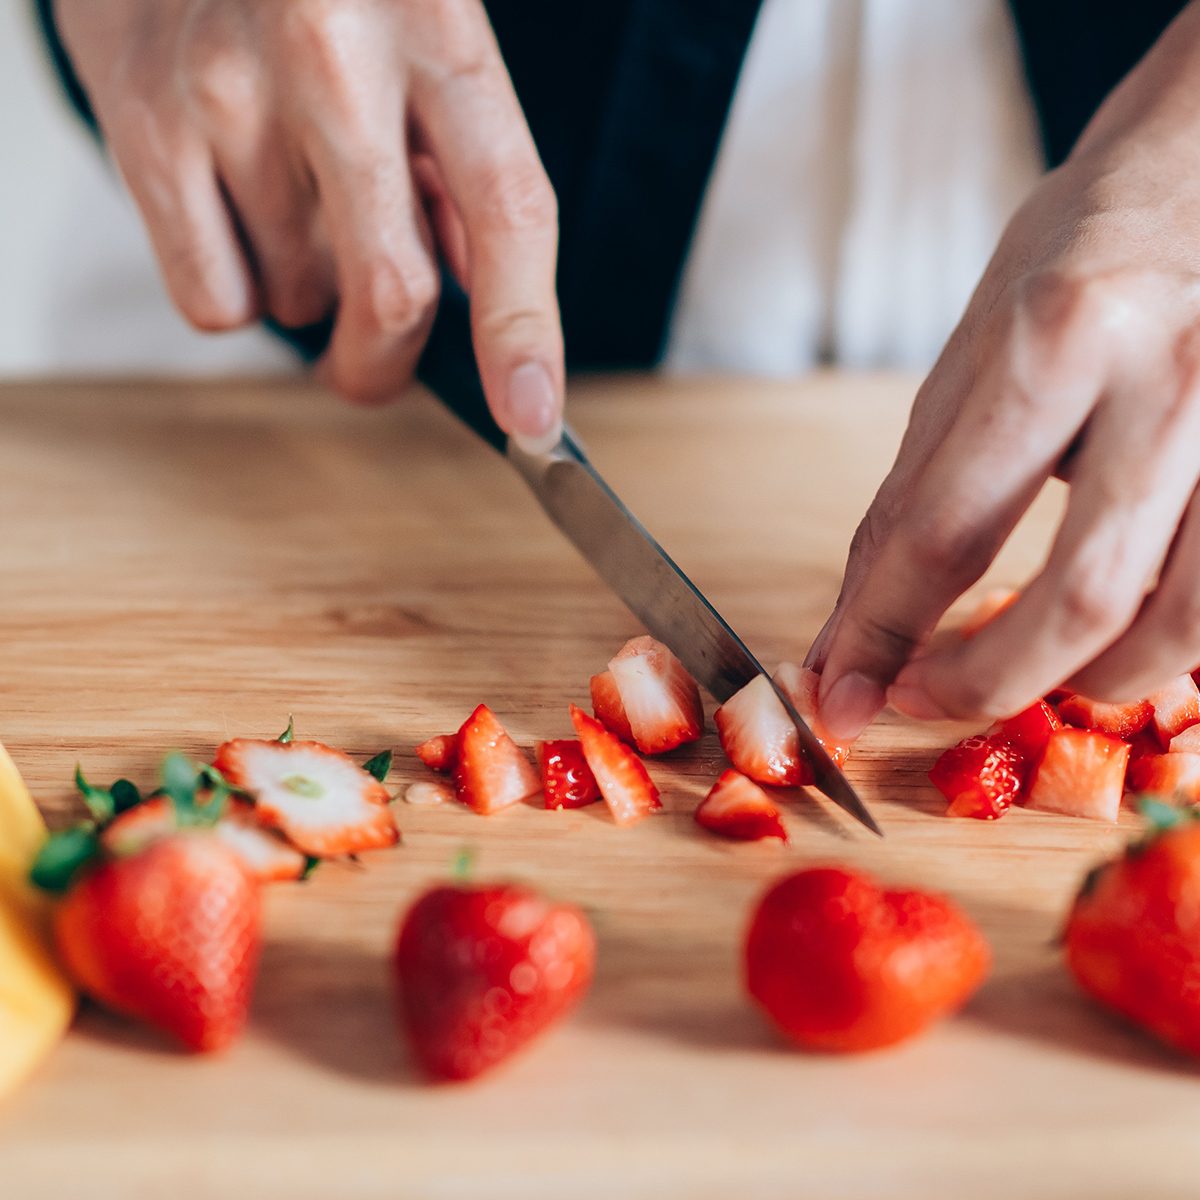 Cutting strawberries